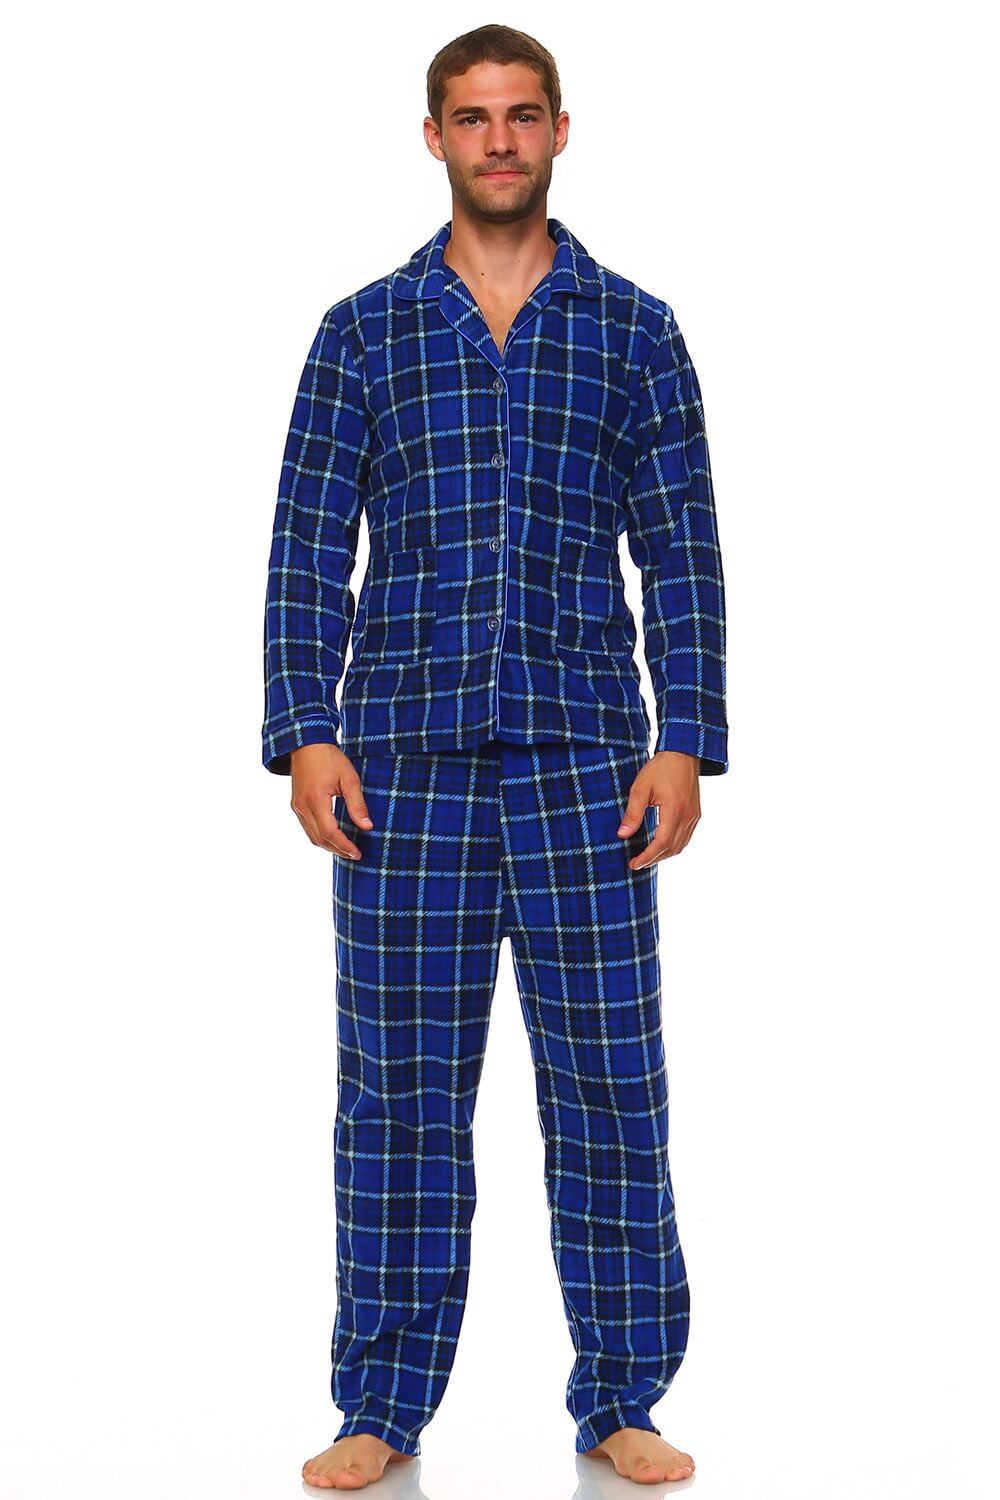 Tom Franks Mens Fleece Pyjama Lounge Pants M-2XL Plain or Patterned 